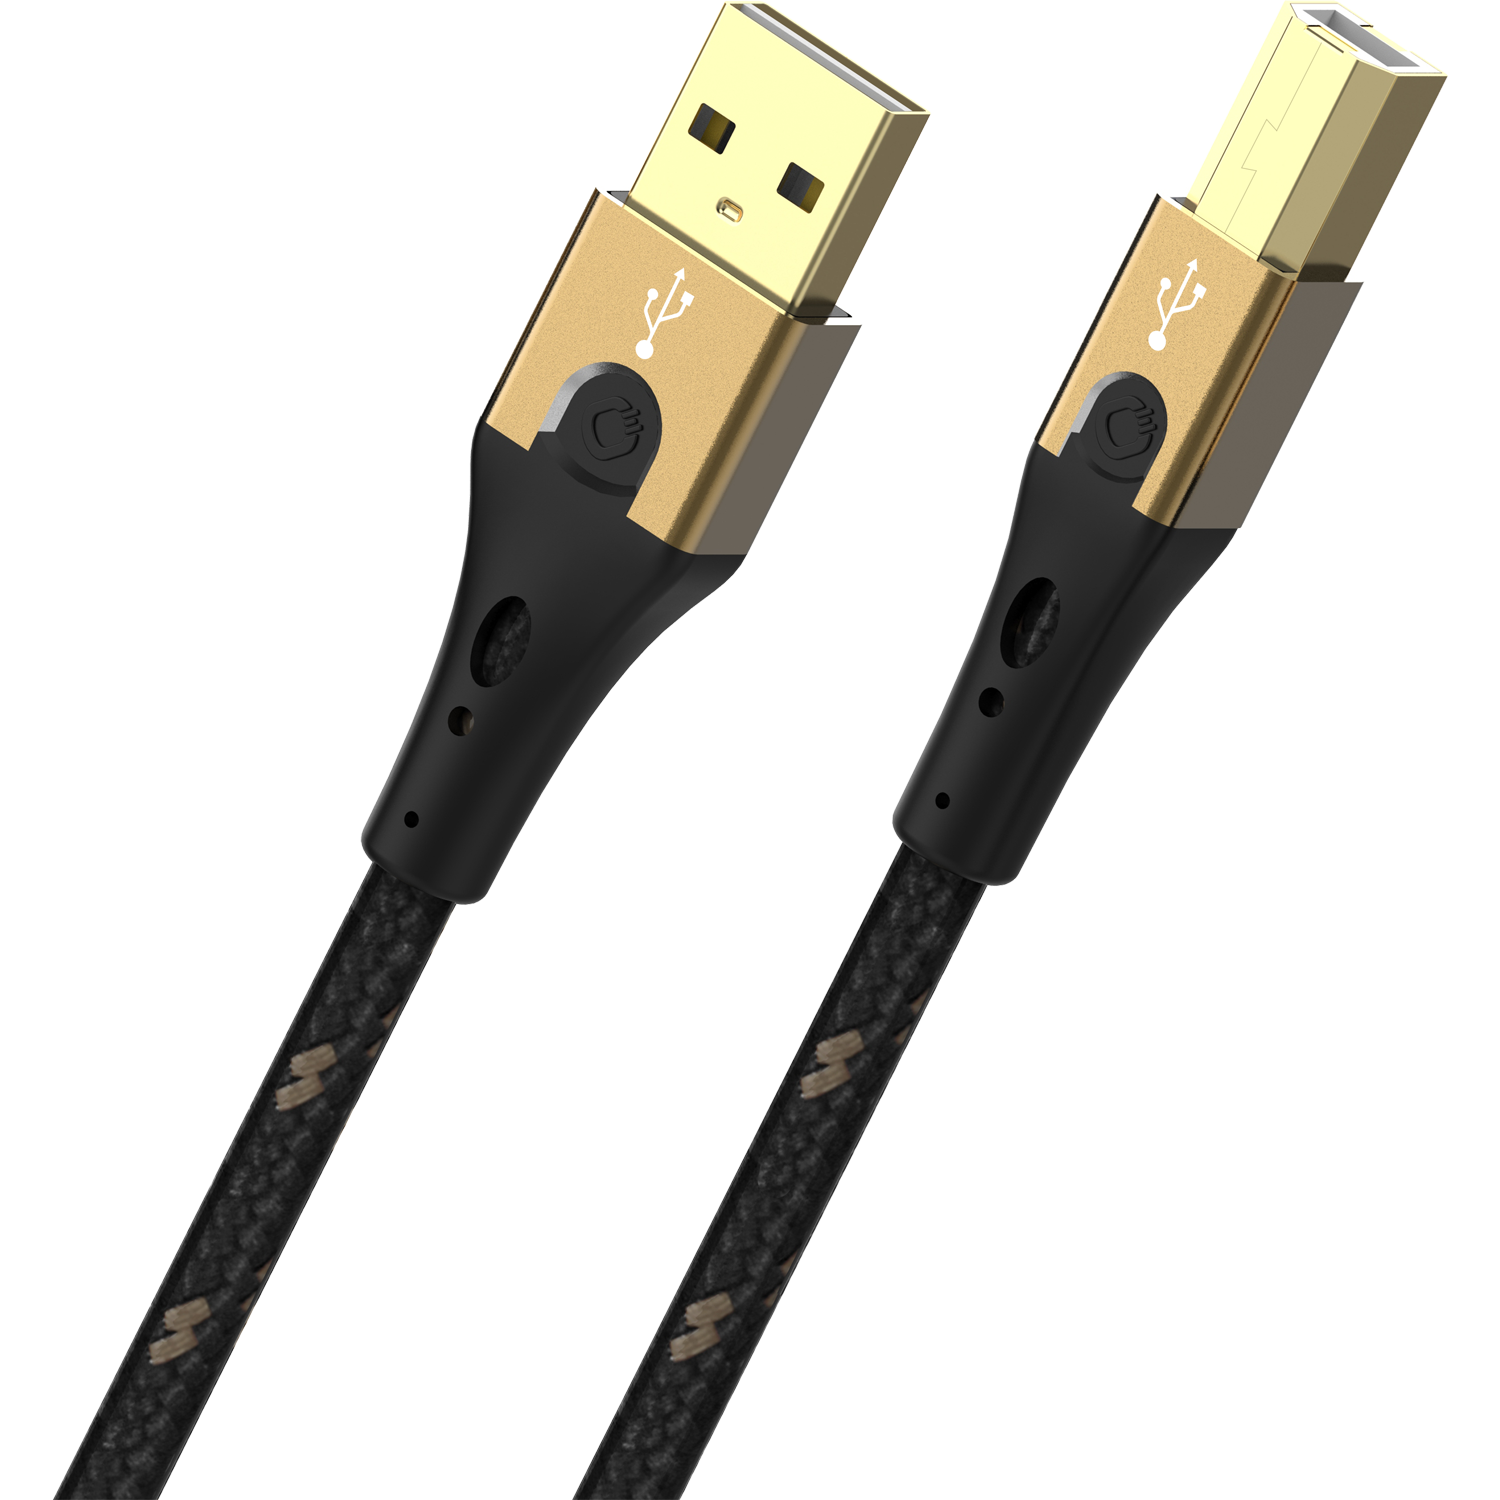 2.0 Typ OEHLBACH Kabel Typ Primus A B auf USB-Kabel B